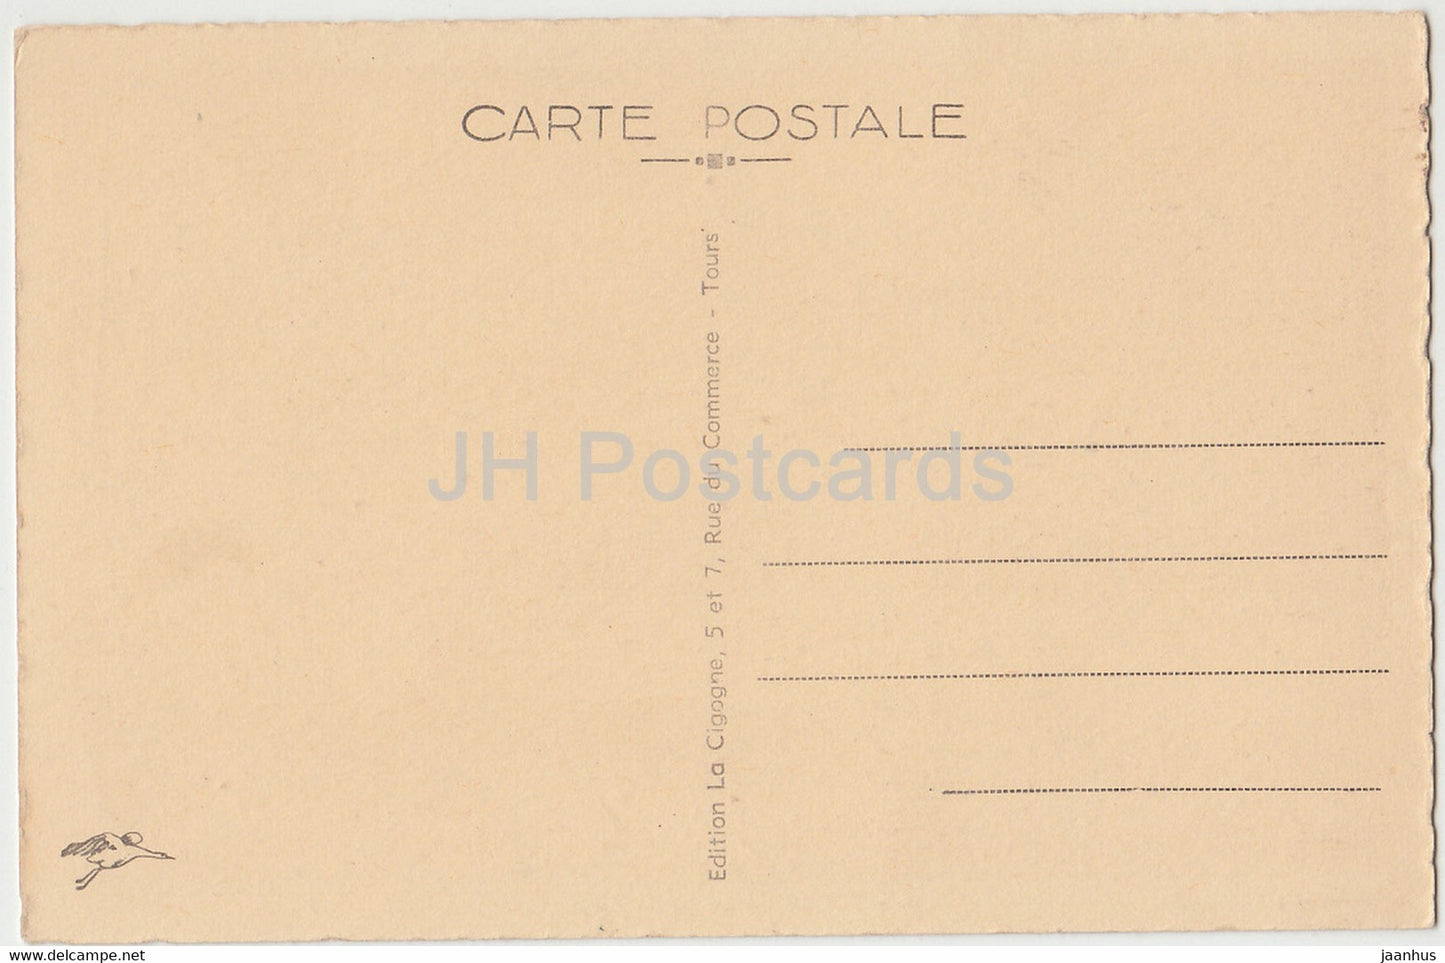 Tours - Le Jardin Botanique - 32 - old postcard - France - unused